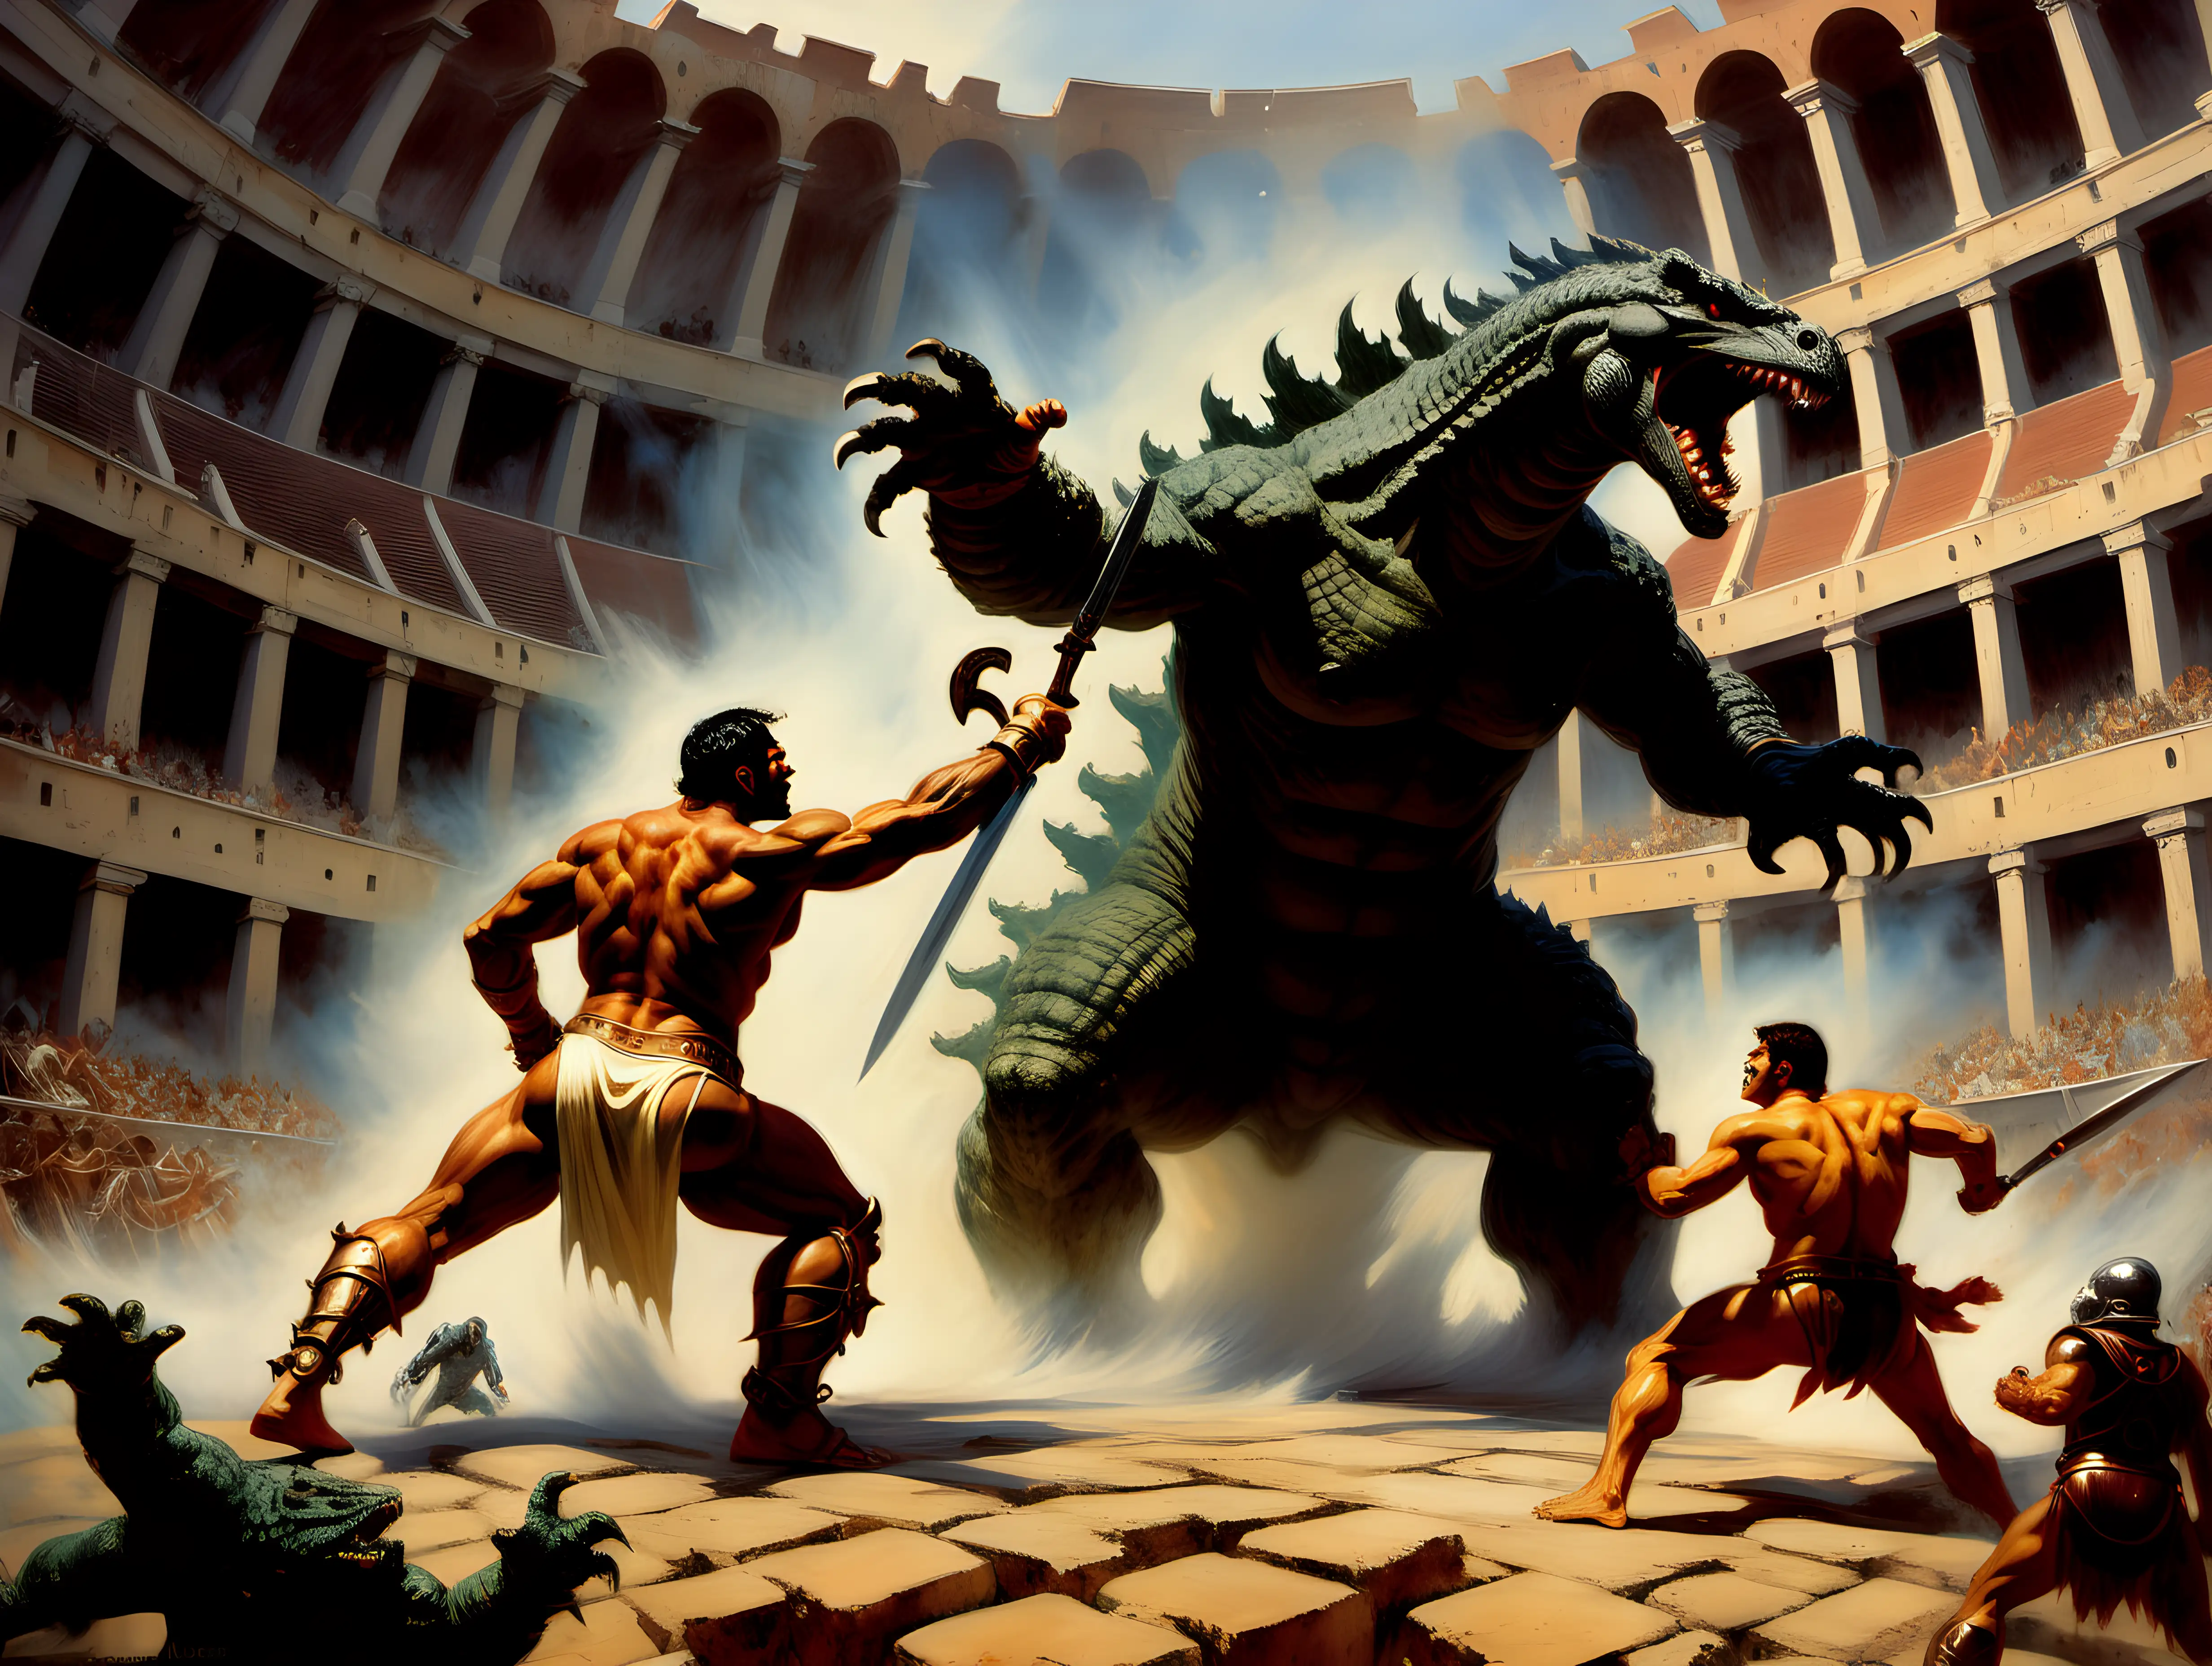 Gladiators fighting Godzilla in ancient Rome coliseum Frank Frazetta style